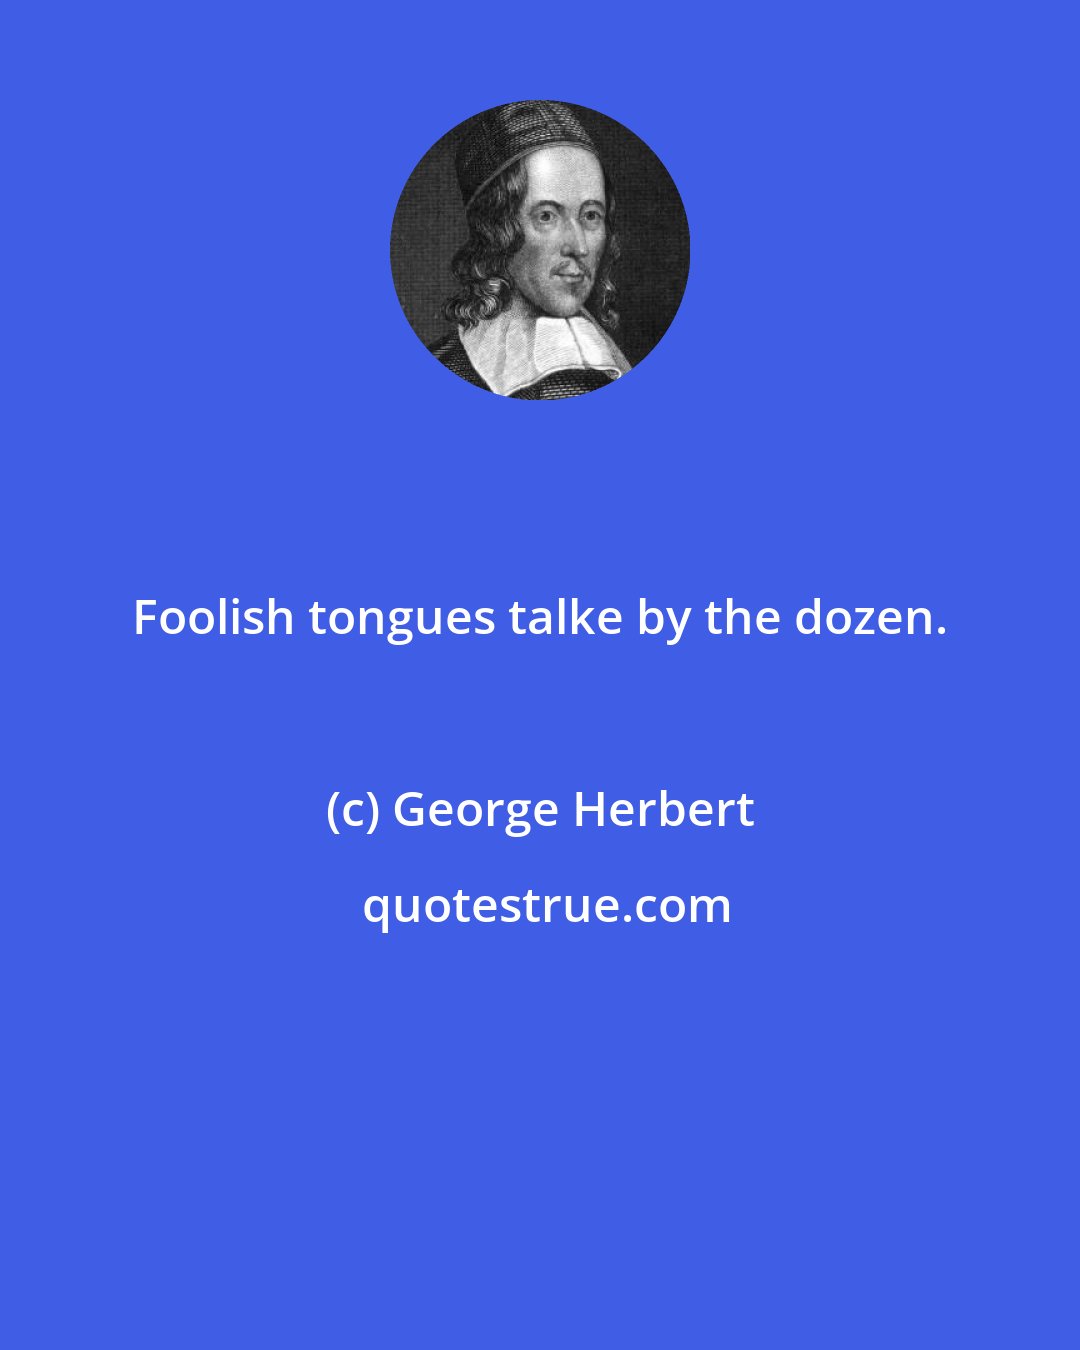 George Herbert: Foolish tongues talke by the dozen.